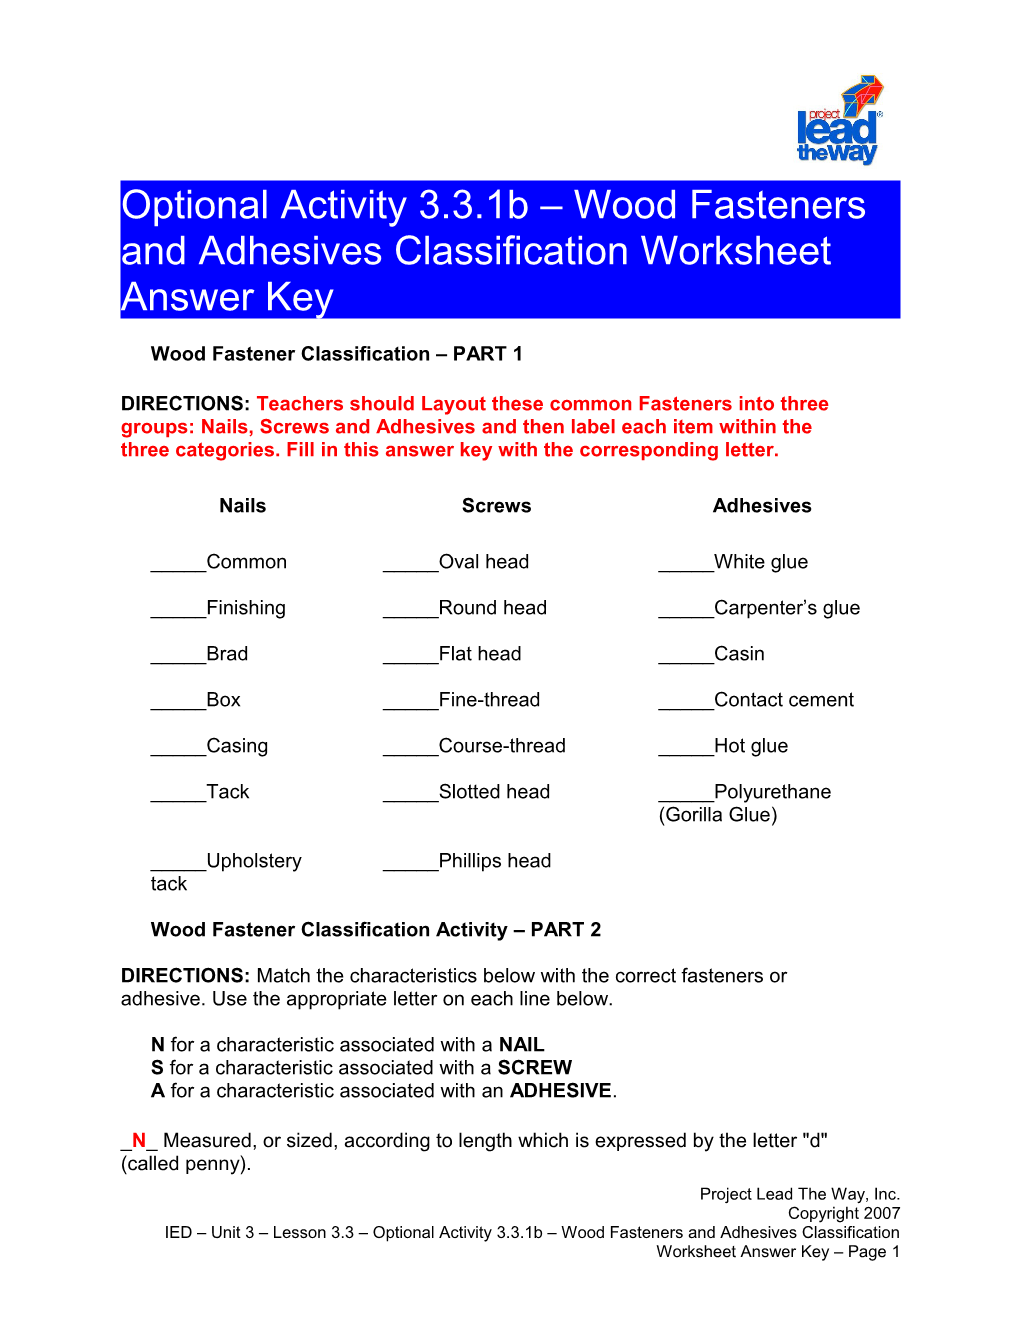 Optact3.3.1B: Wood Fasteners & Adhesives Classification Answer Key